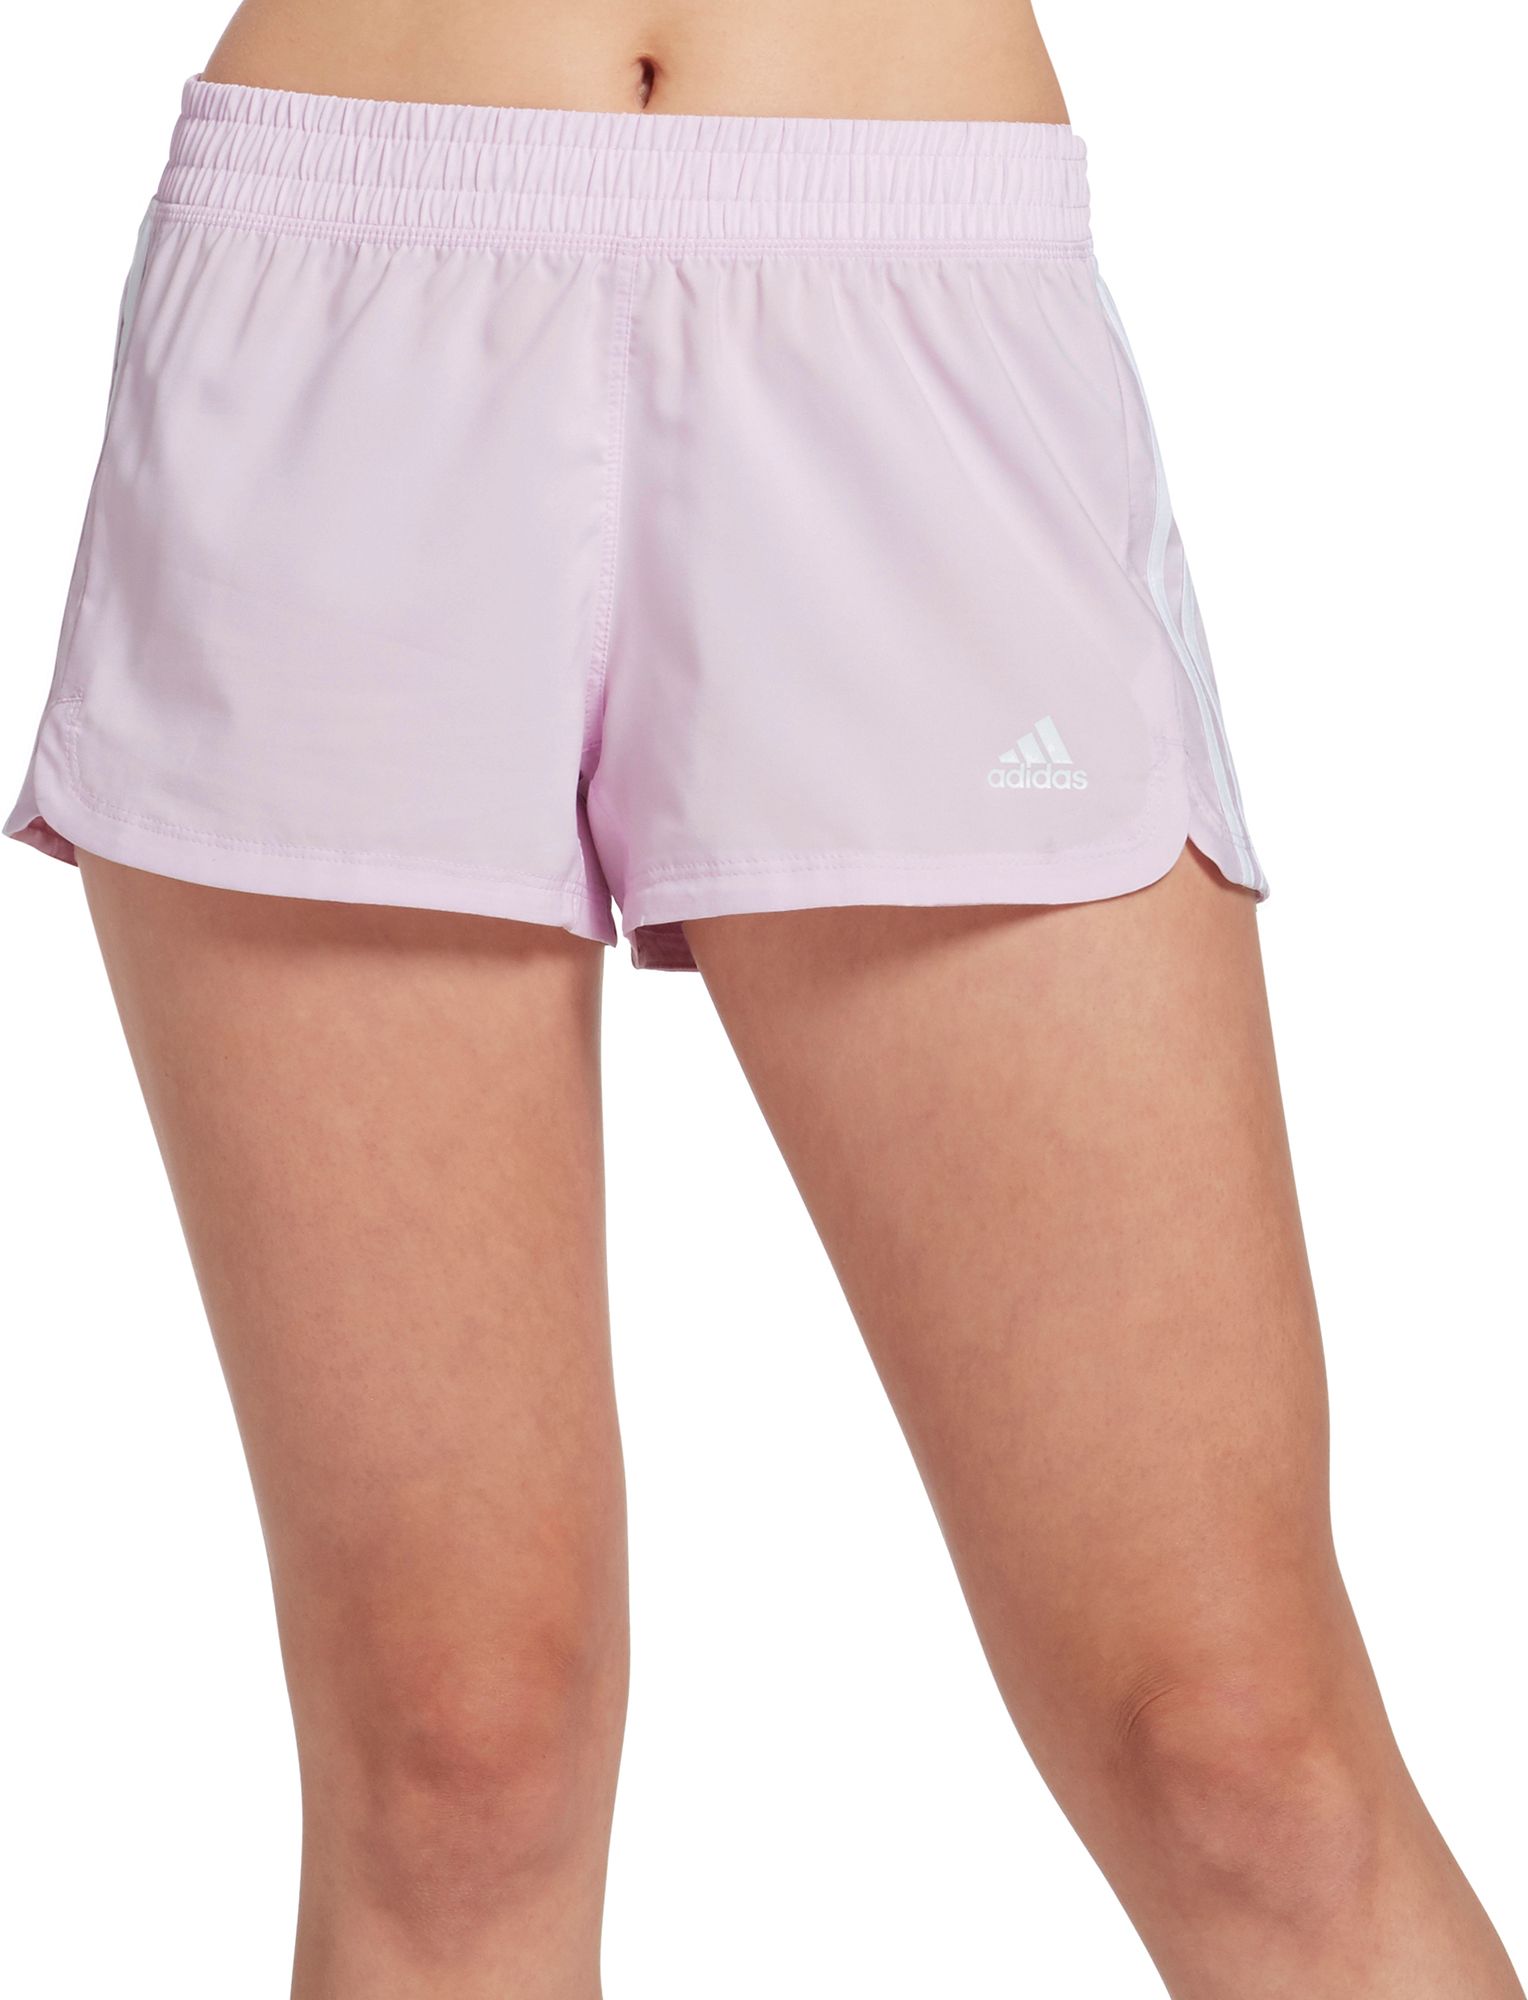 adidas shorts with built in underwear